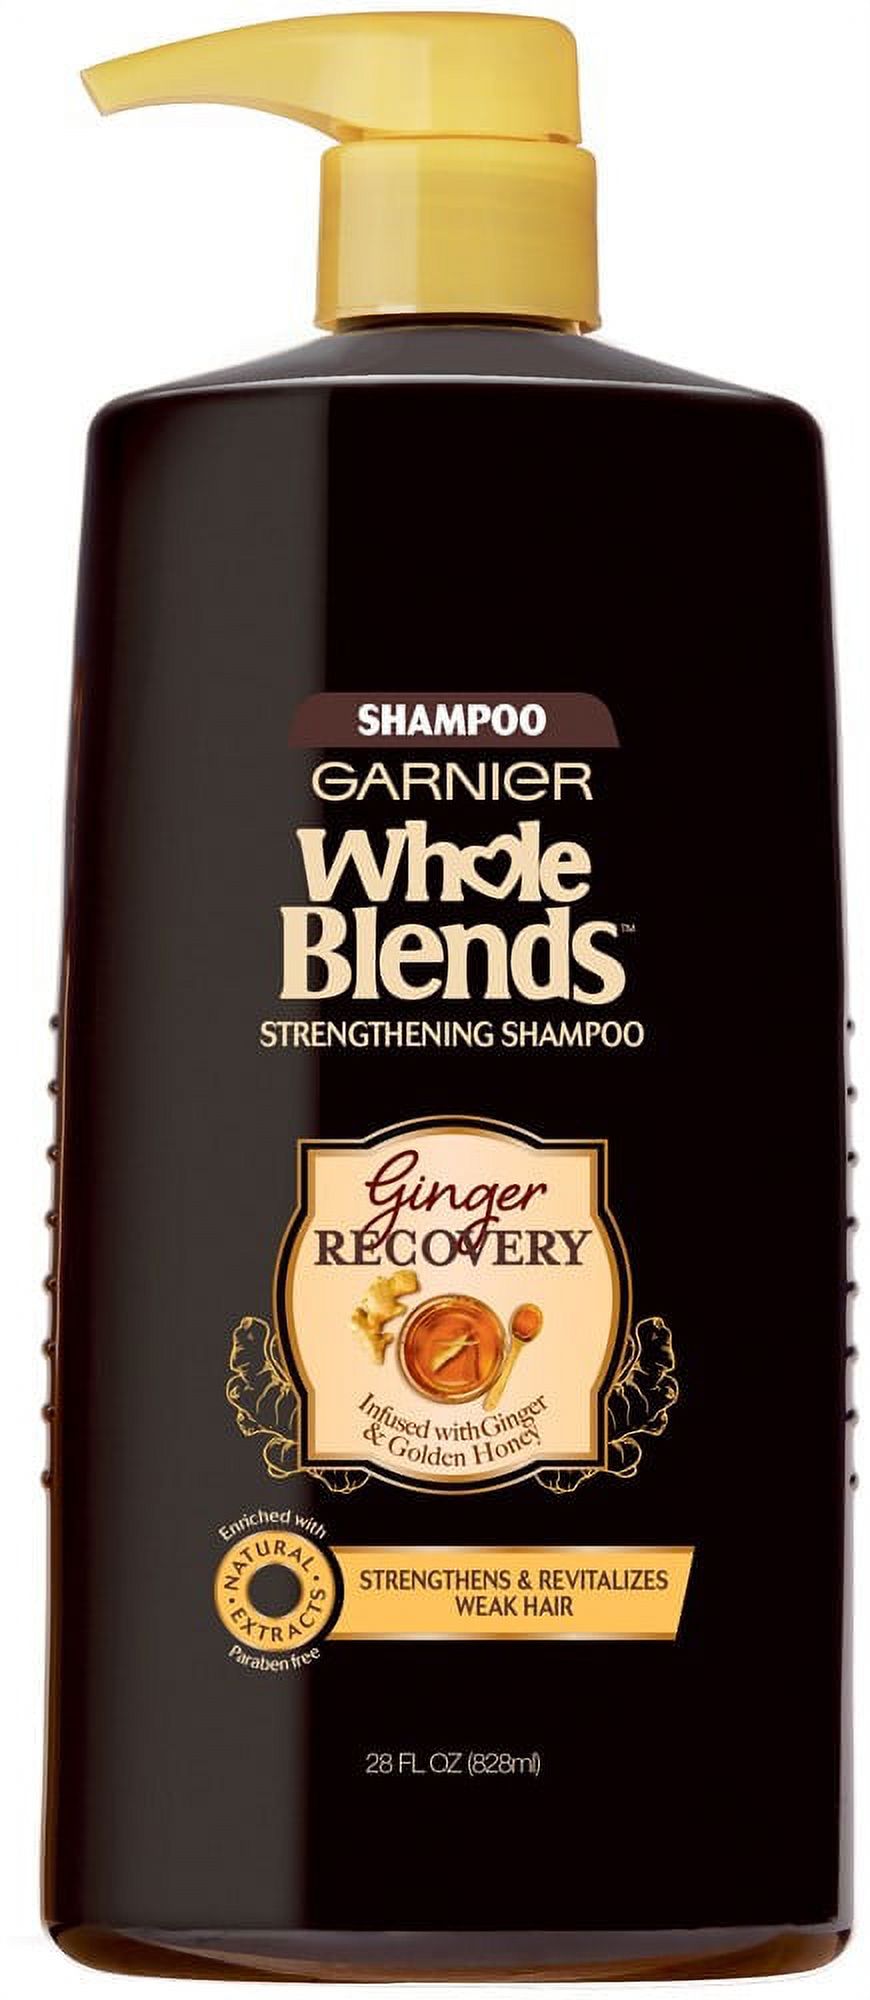 Garnier Whole Blends Strengthening Shampoo with Ginger and Golden Honey, 28 fl oz - image 1 of 3